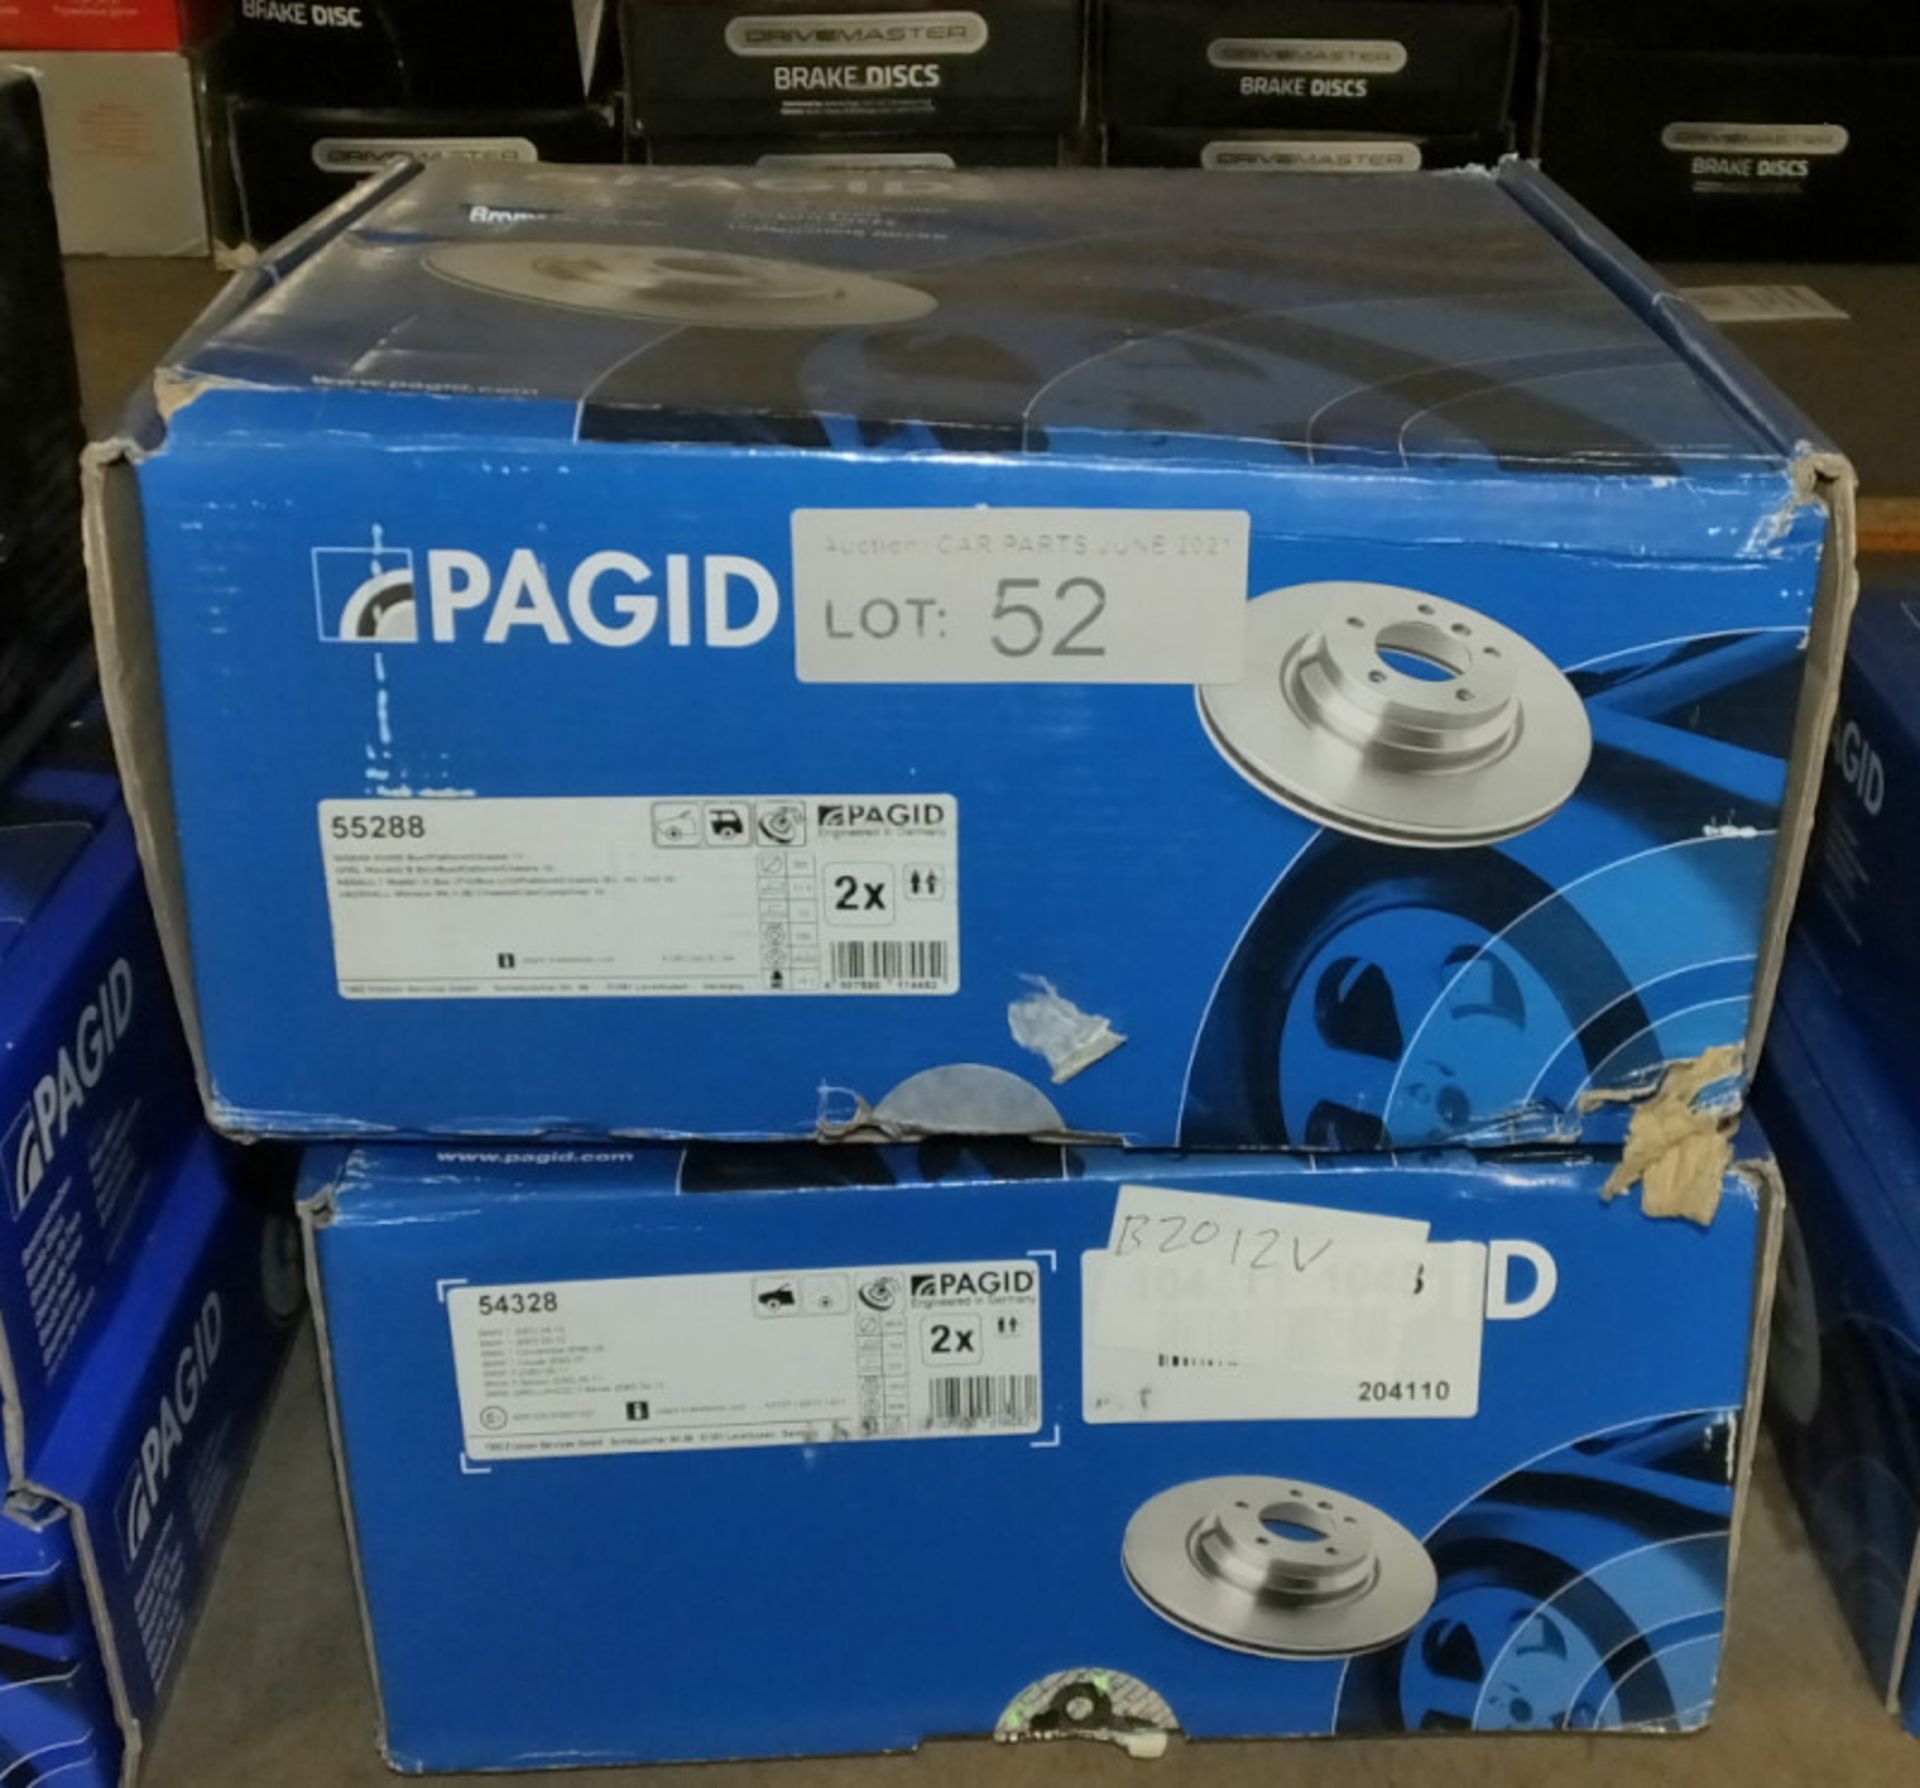 2x Pagid Brake Disc Sets - Models - 55288 & 54328